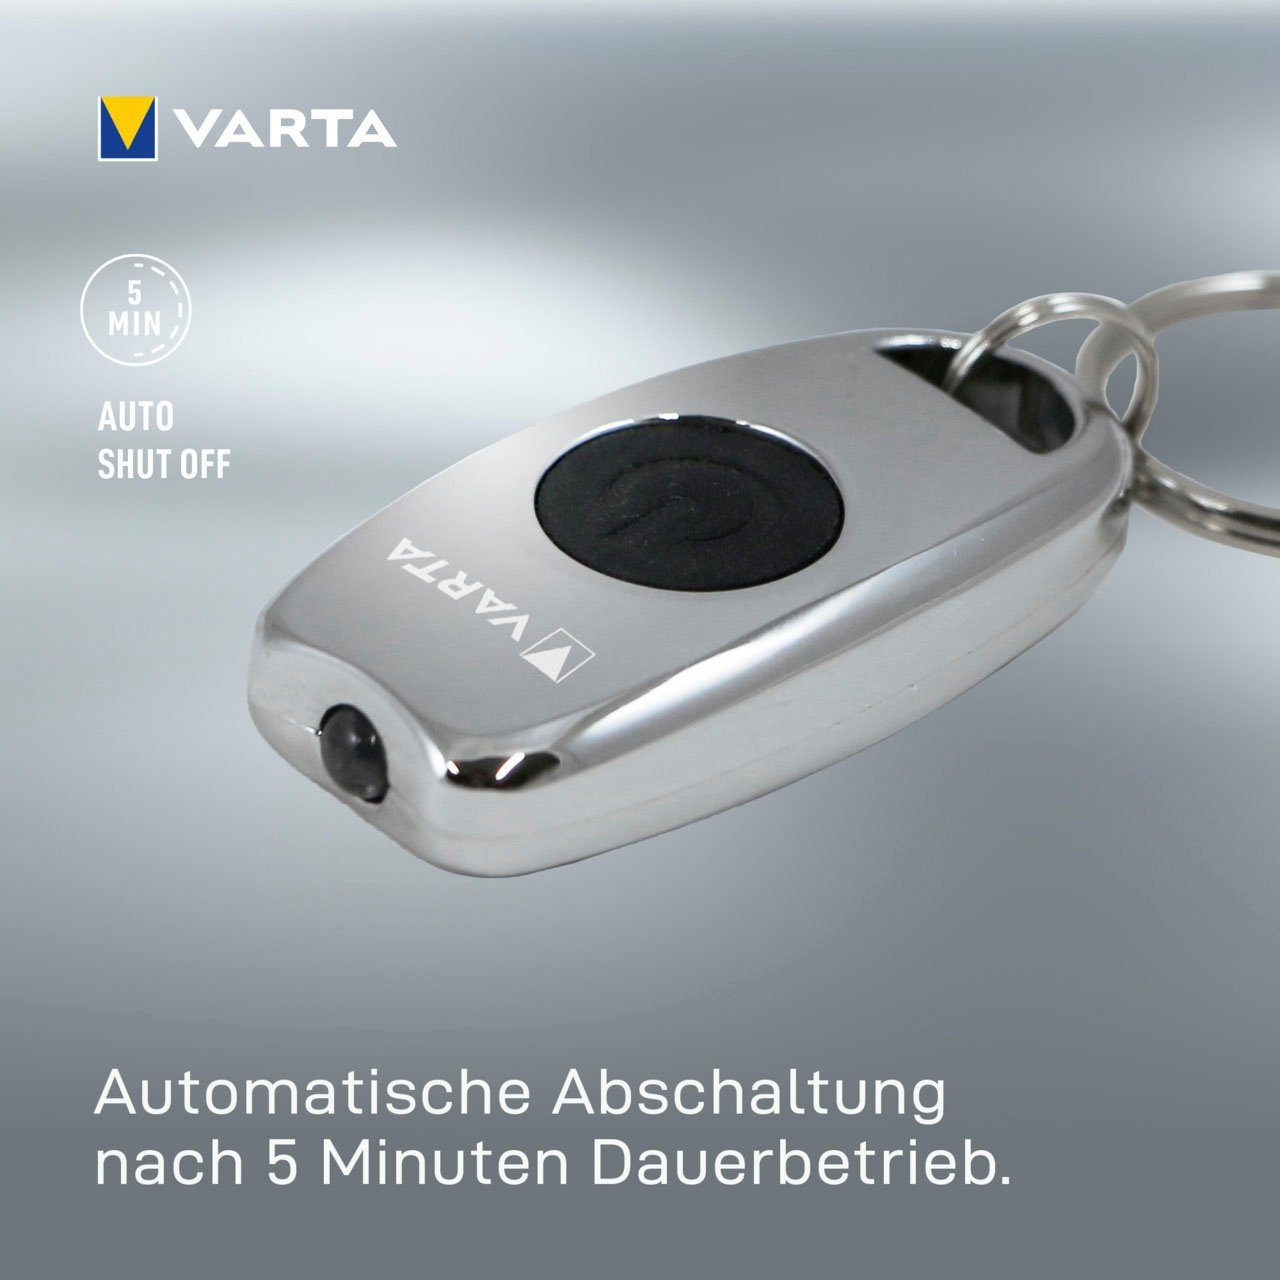 VARTA Metal Light Key Taschenlampe Chain